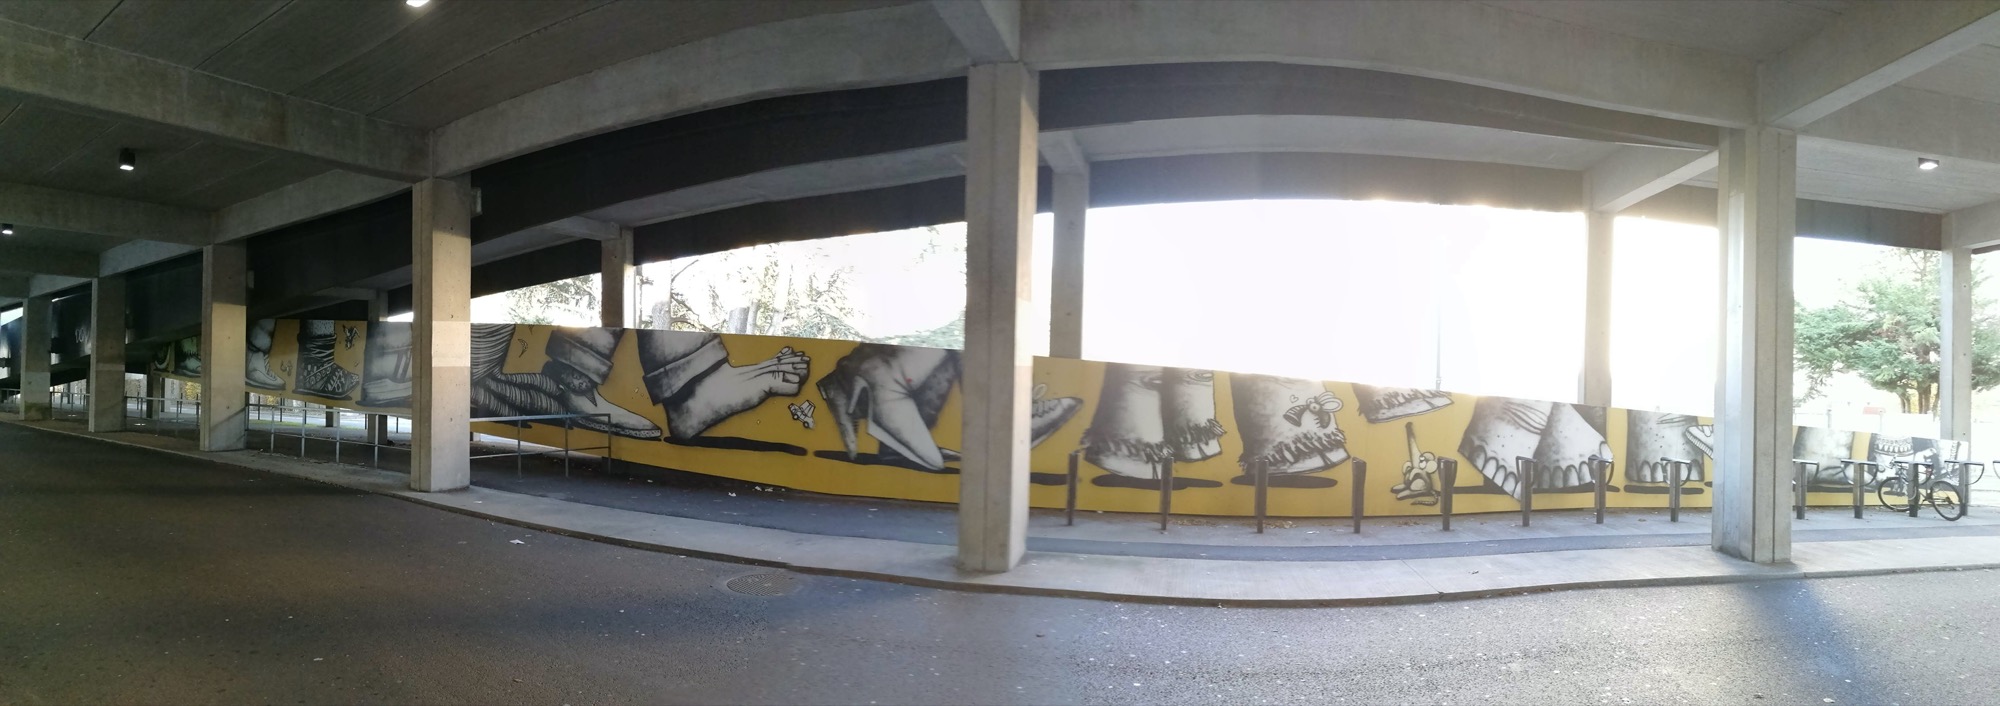 Graffiti 567  de Semor à Saint-Herblain France